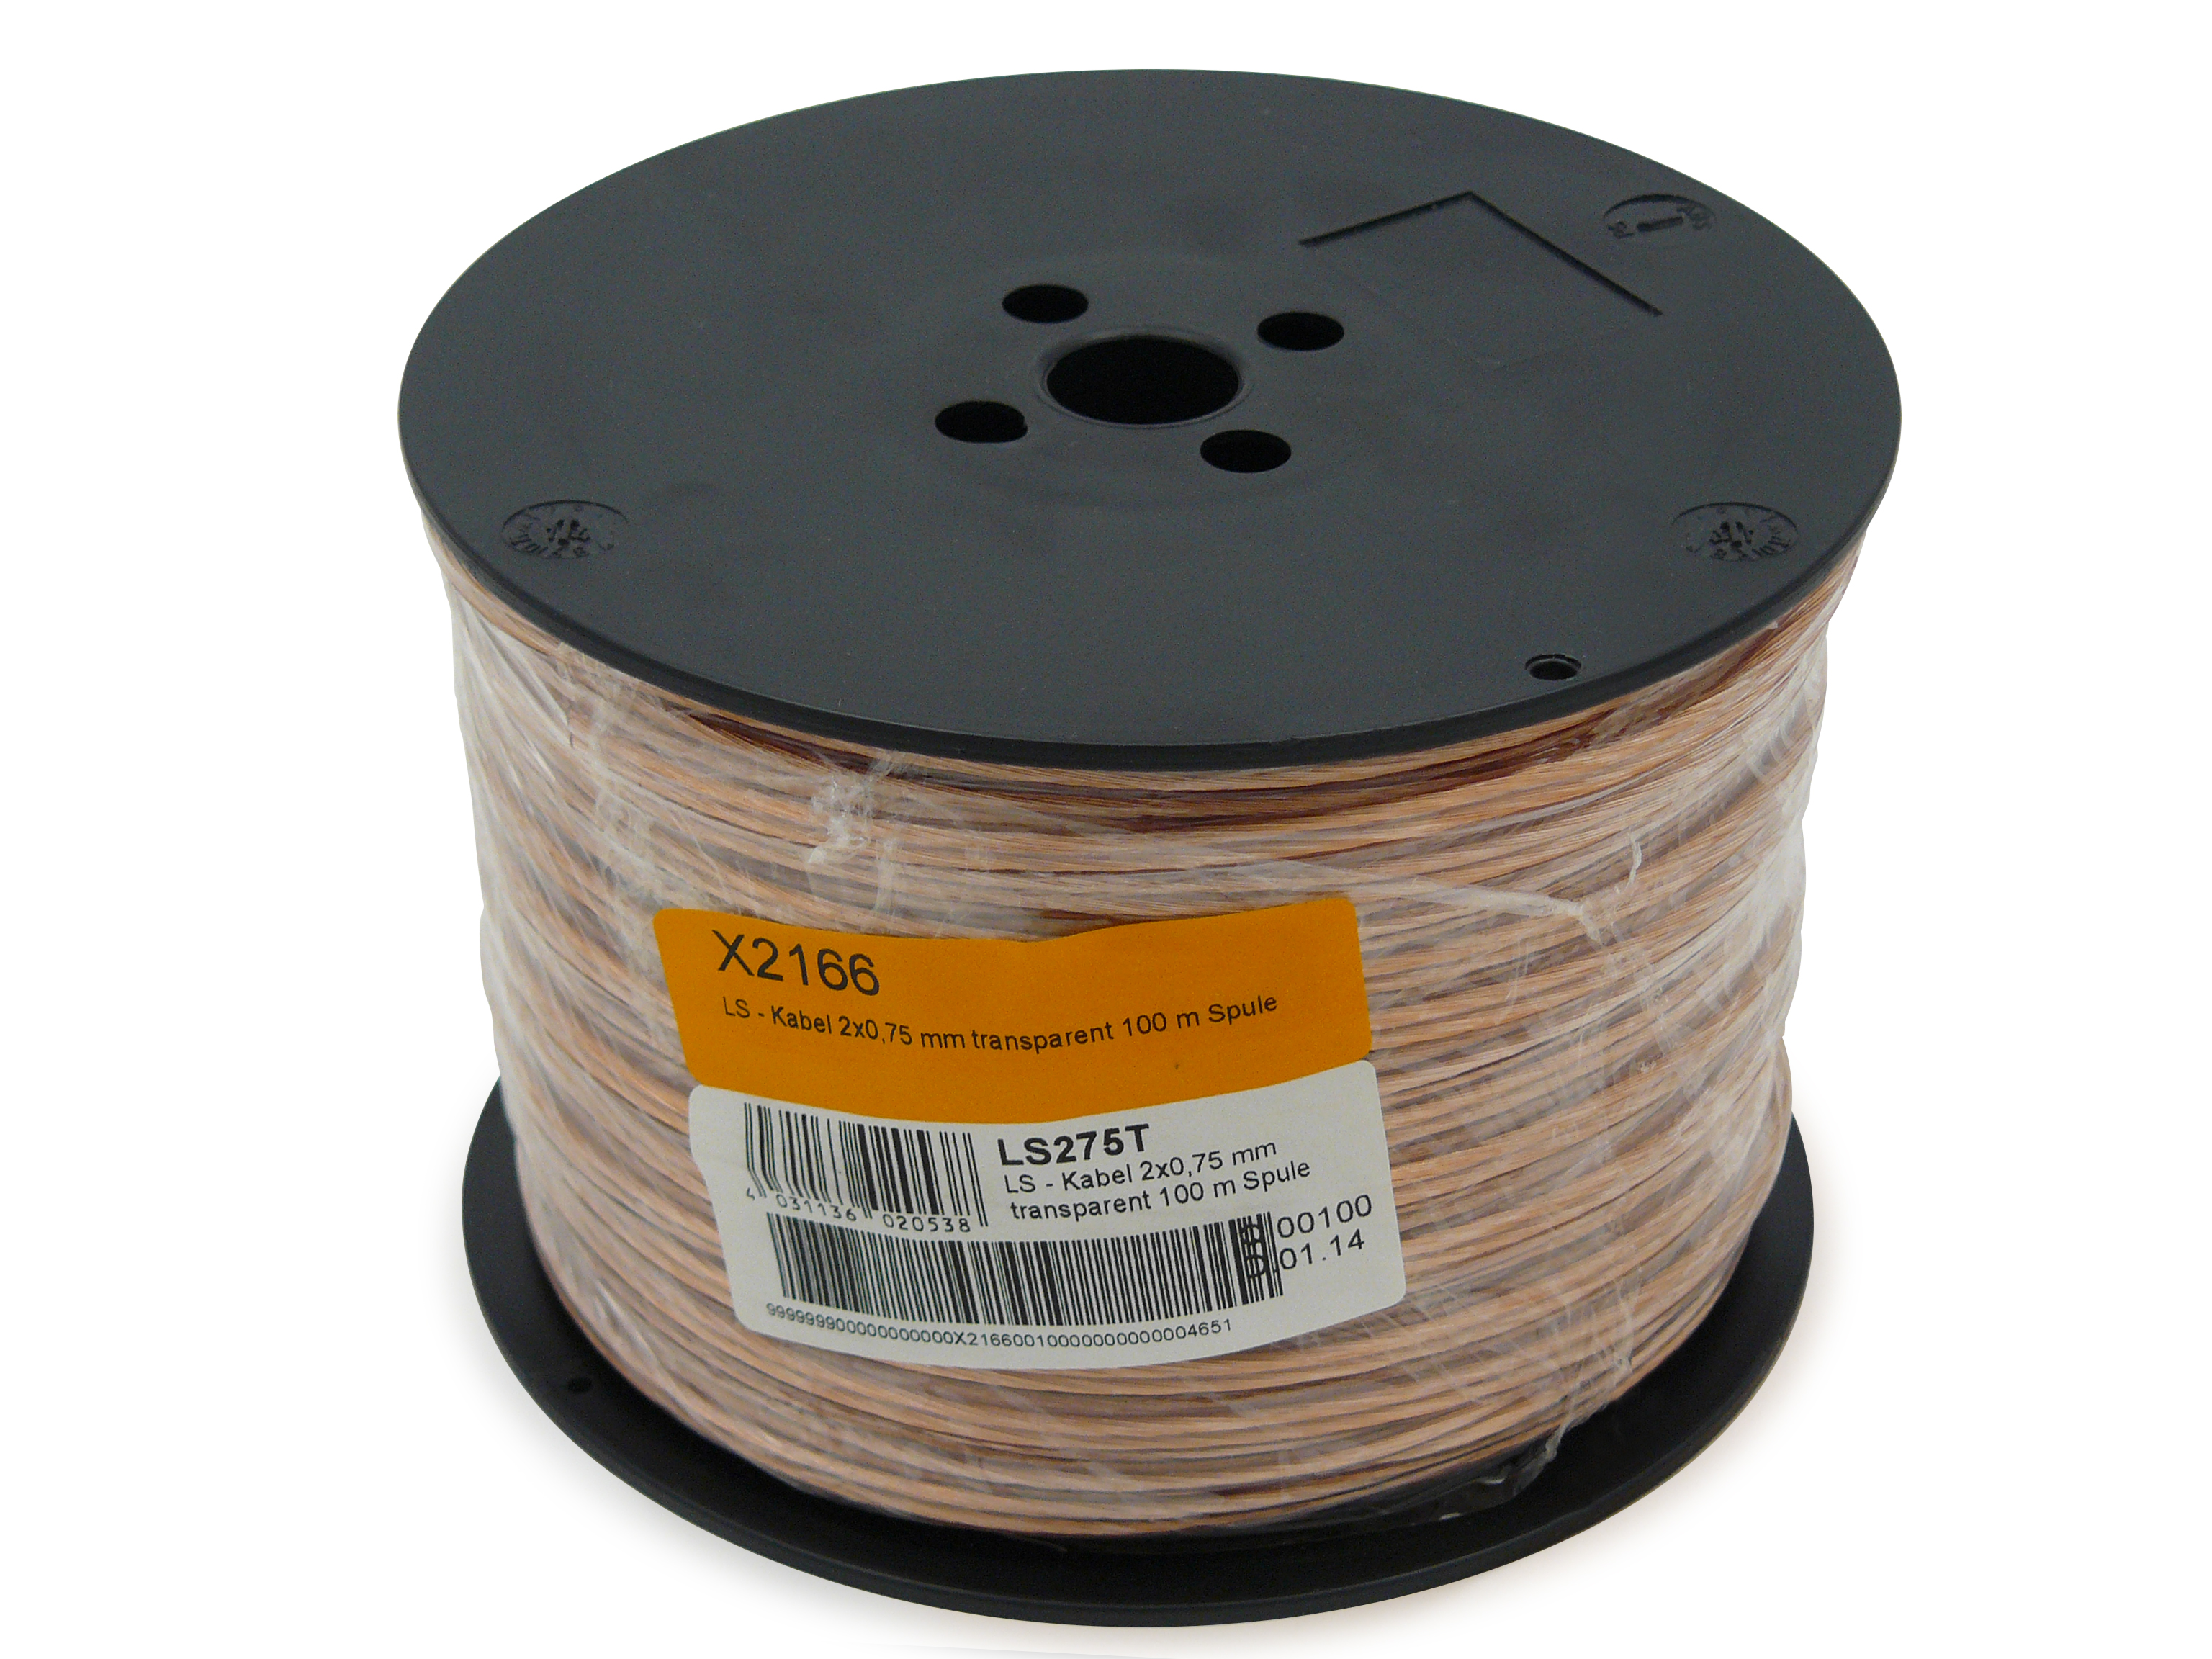 LS - Kabel 2x0,75 mm transparent 100 m Spule